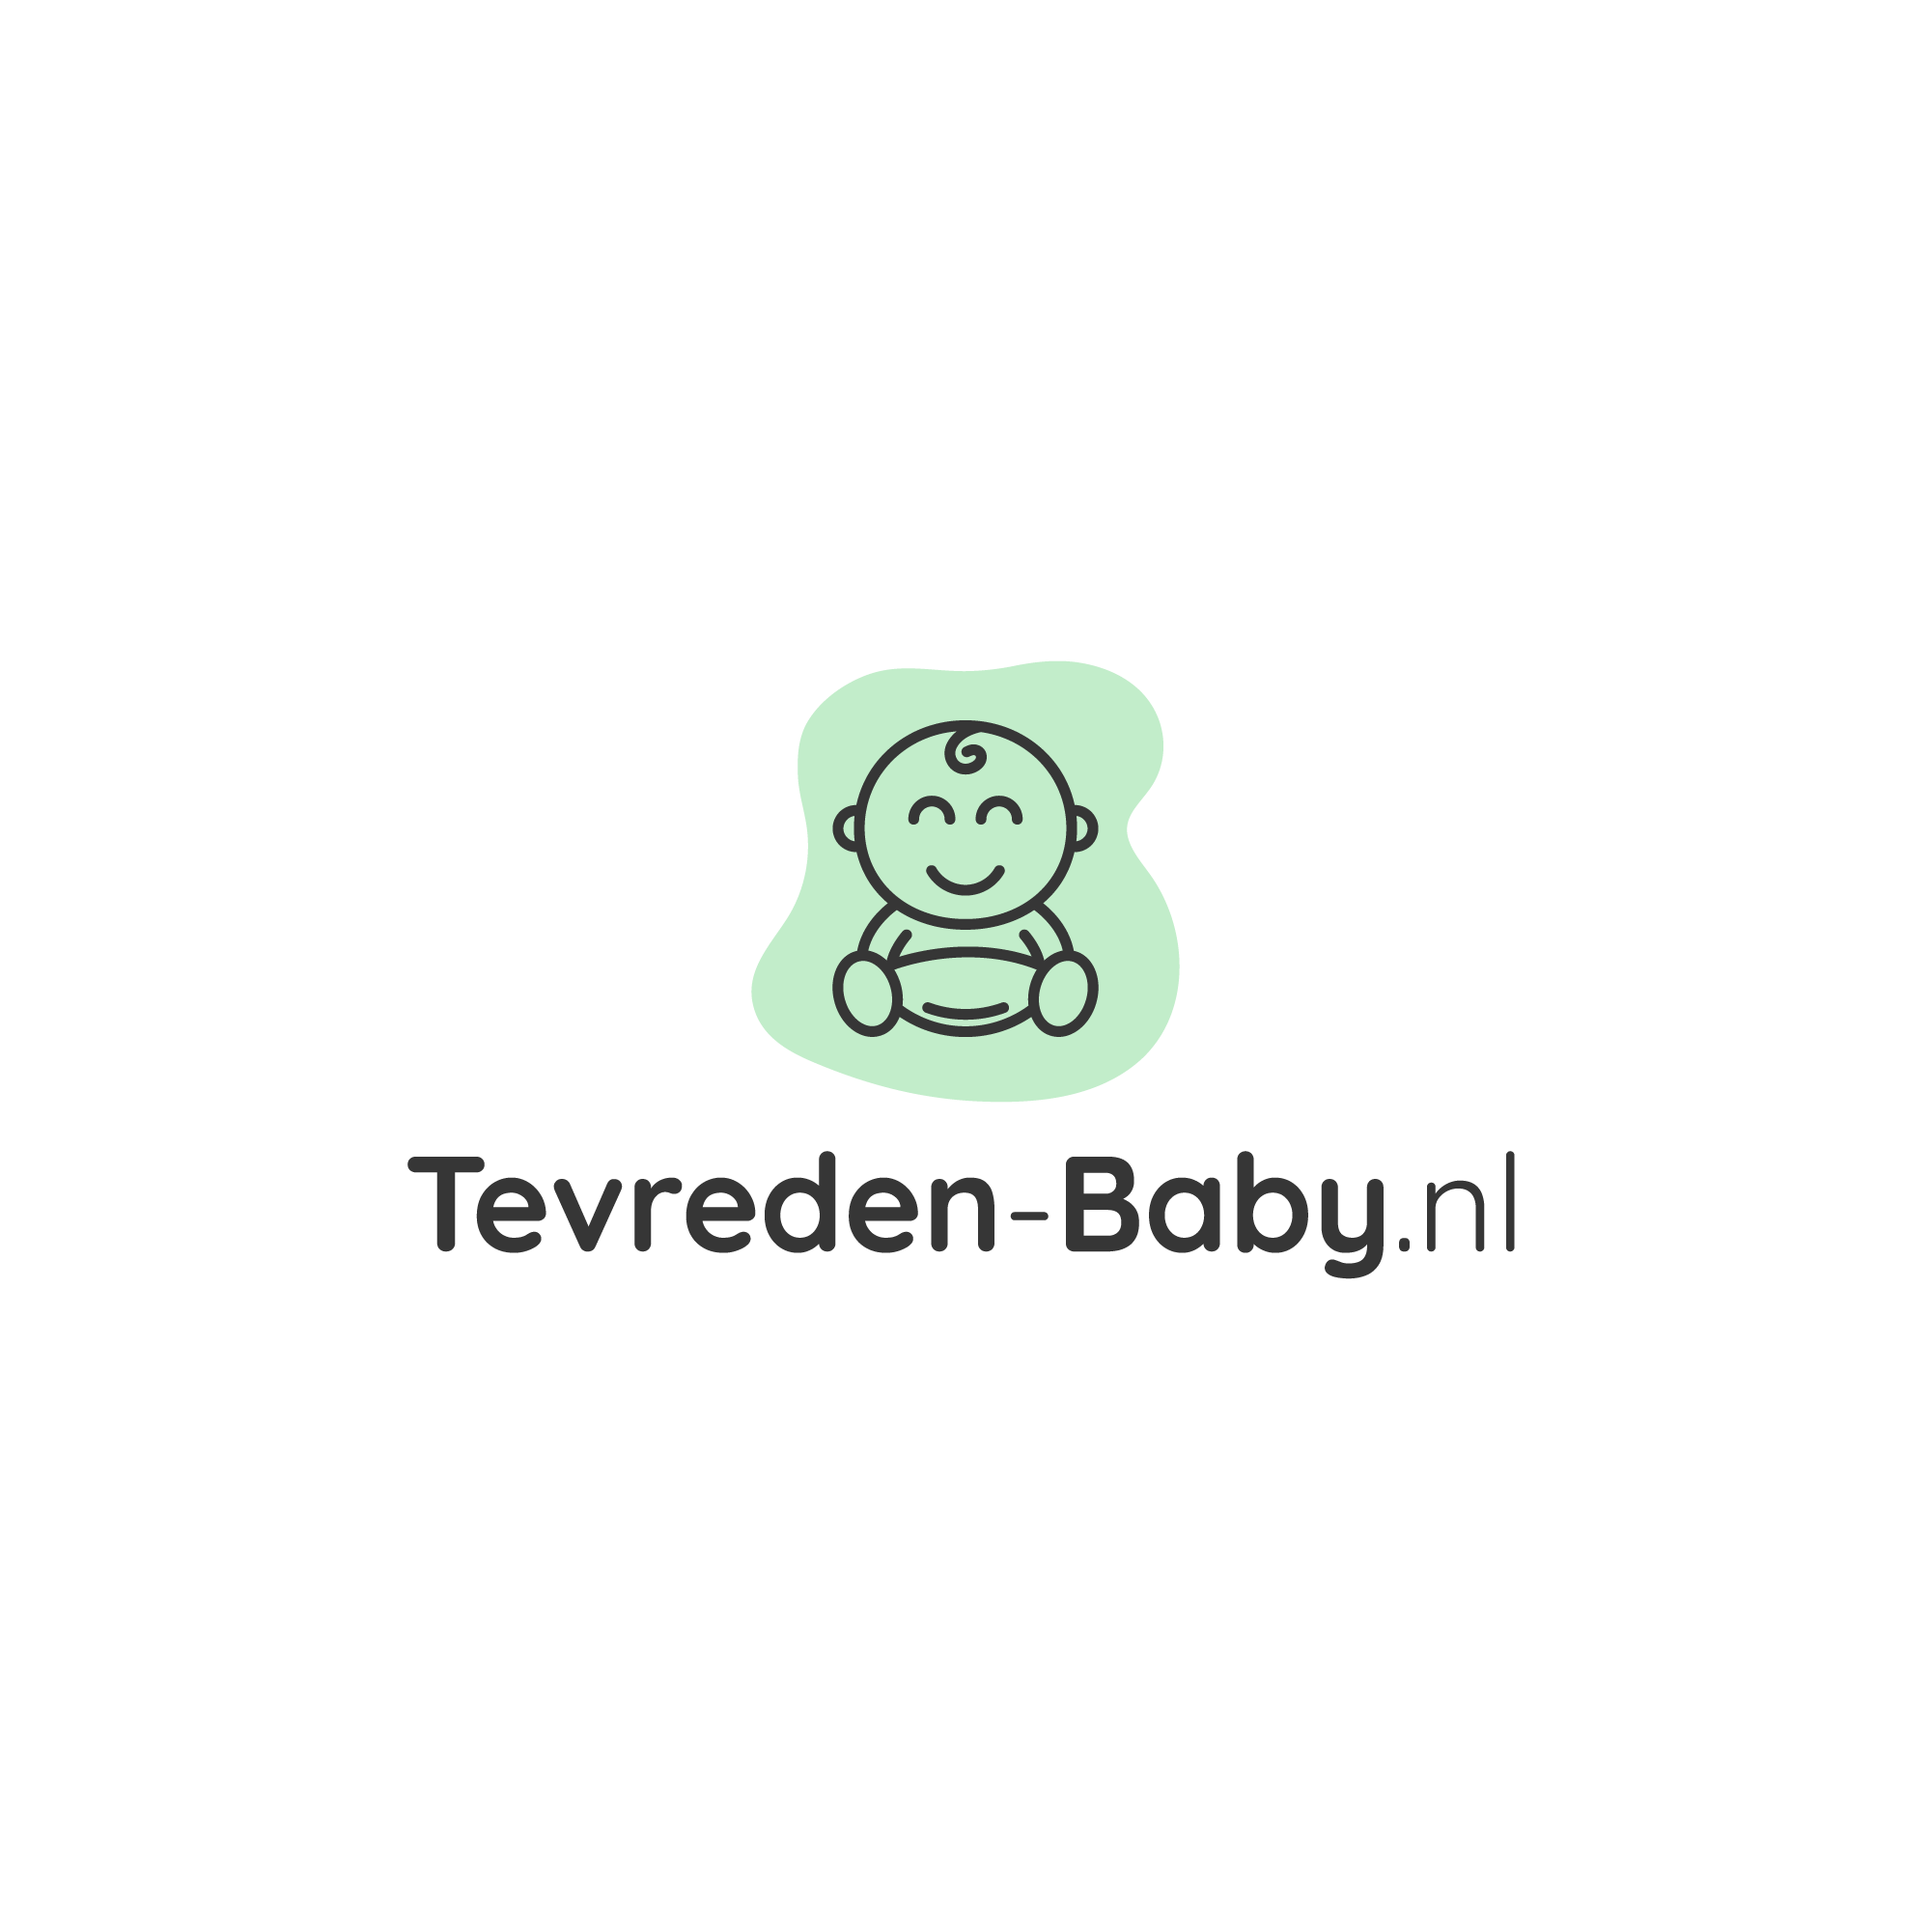 Tevreden-Baby logo